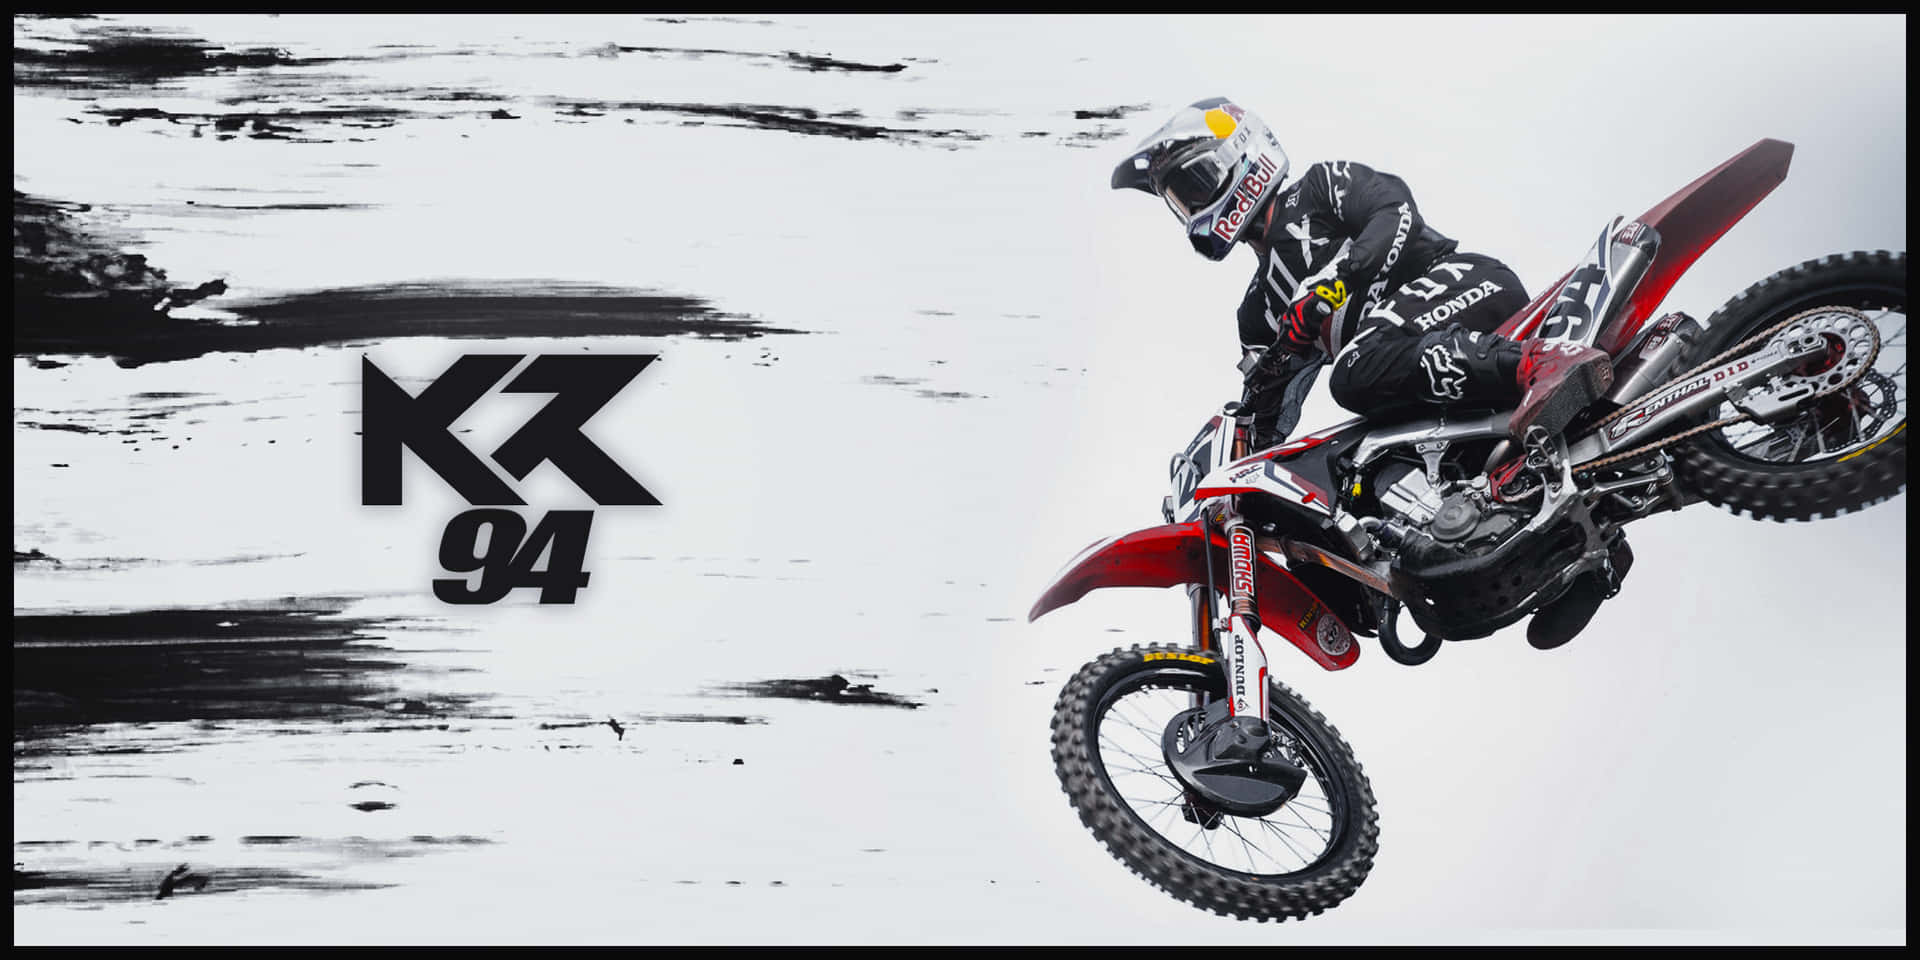 Kk94 Motocross Racingspel Wallpaper